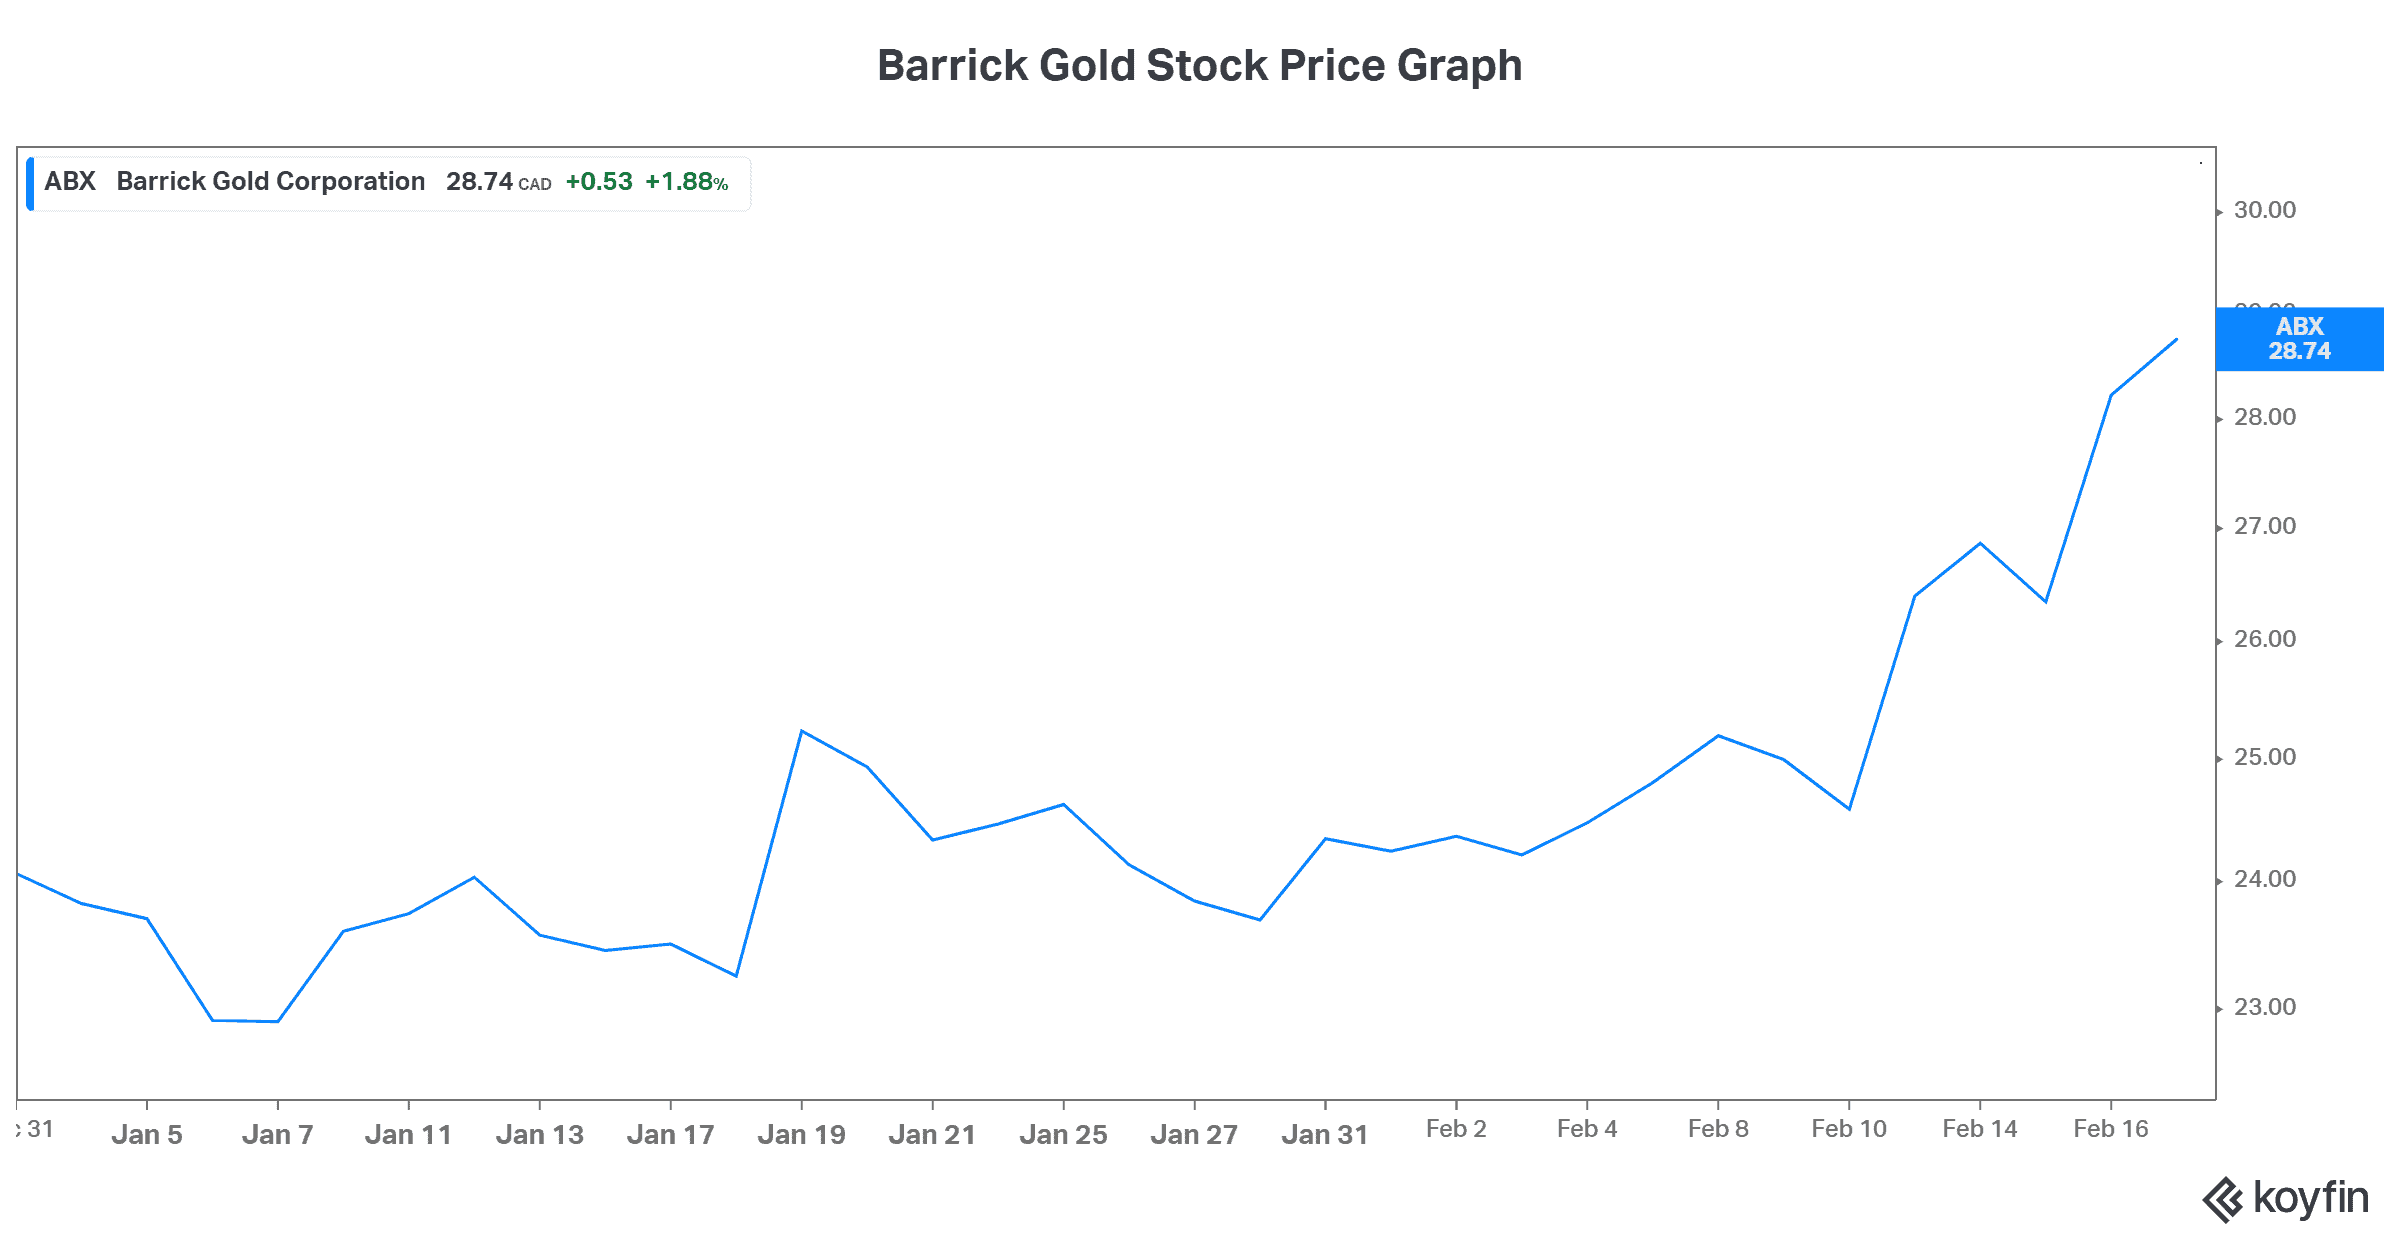 Barrick Gold stock